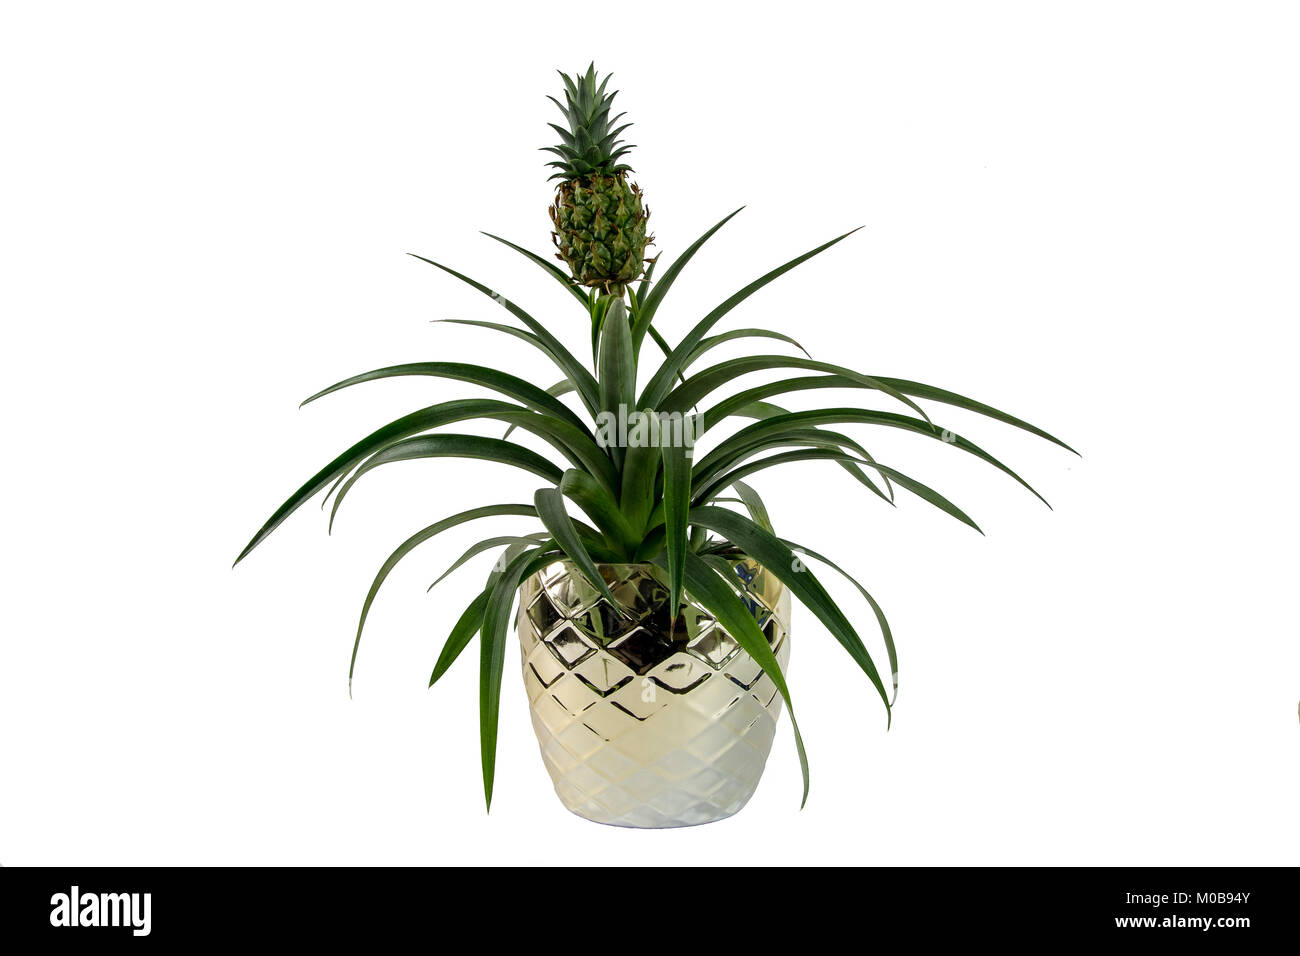 Ornamental Pineapple Plant on a white background. Latin name Ananas comosus Champaca Stock Photo